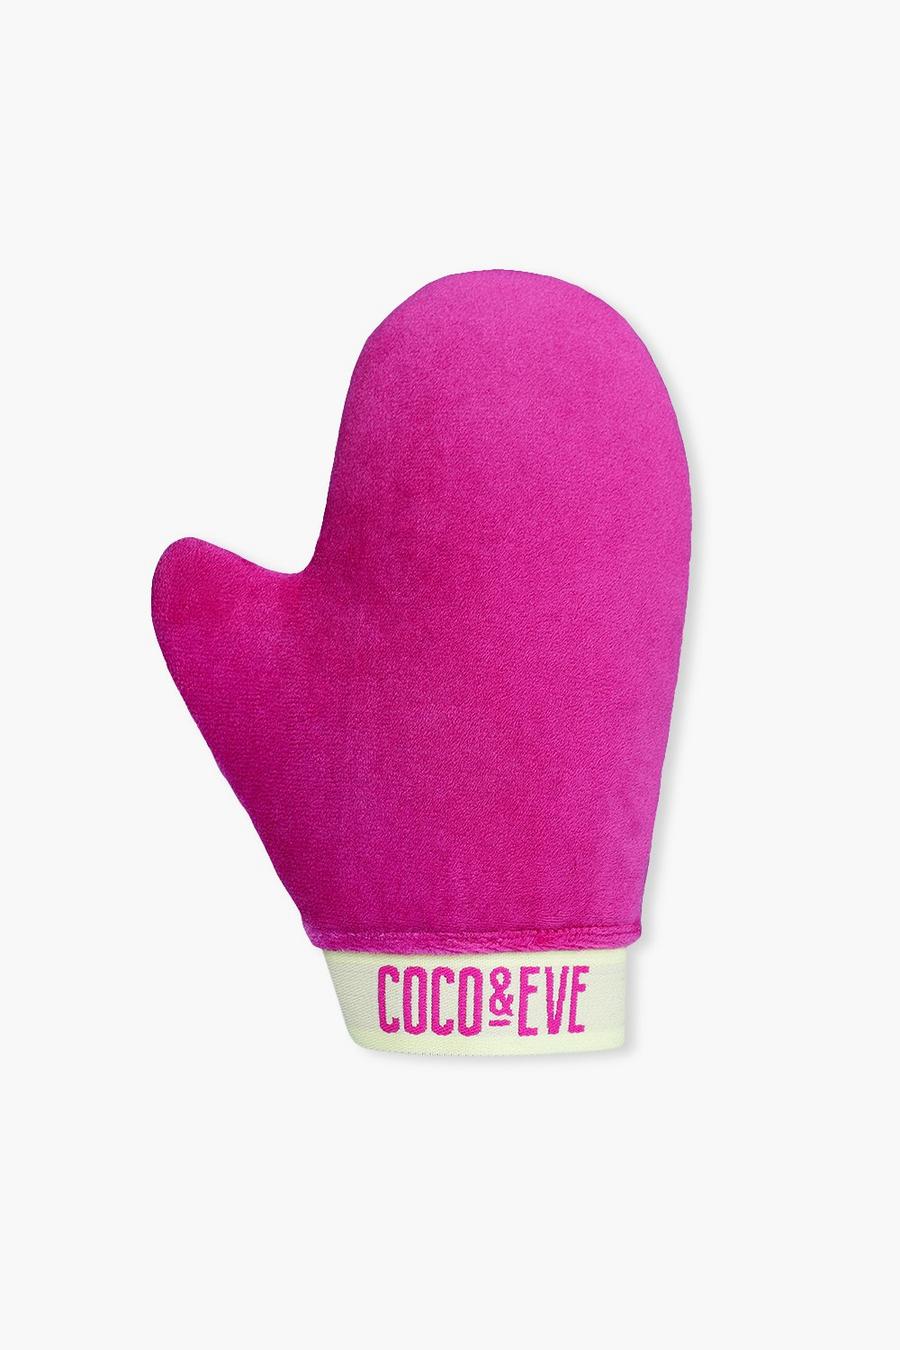 Coco & Eve - Gant applicateur d'autobronzant Sunny Honey, Pink